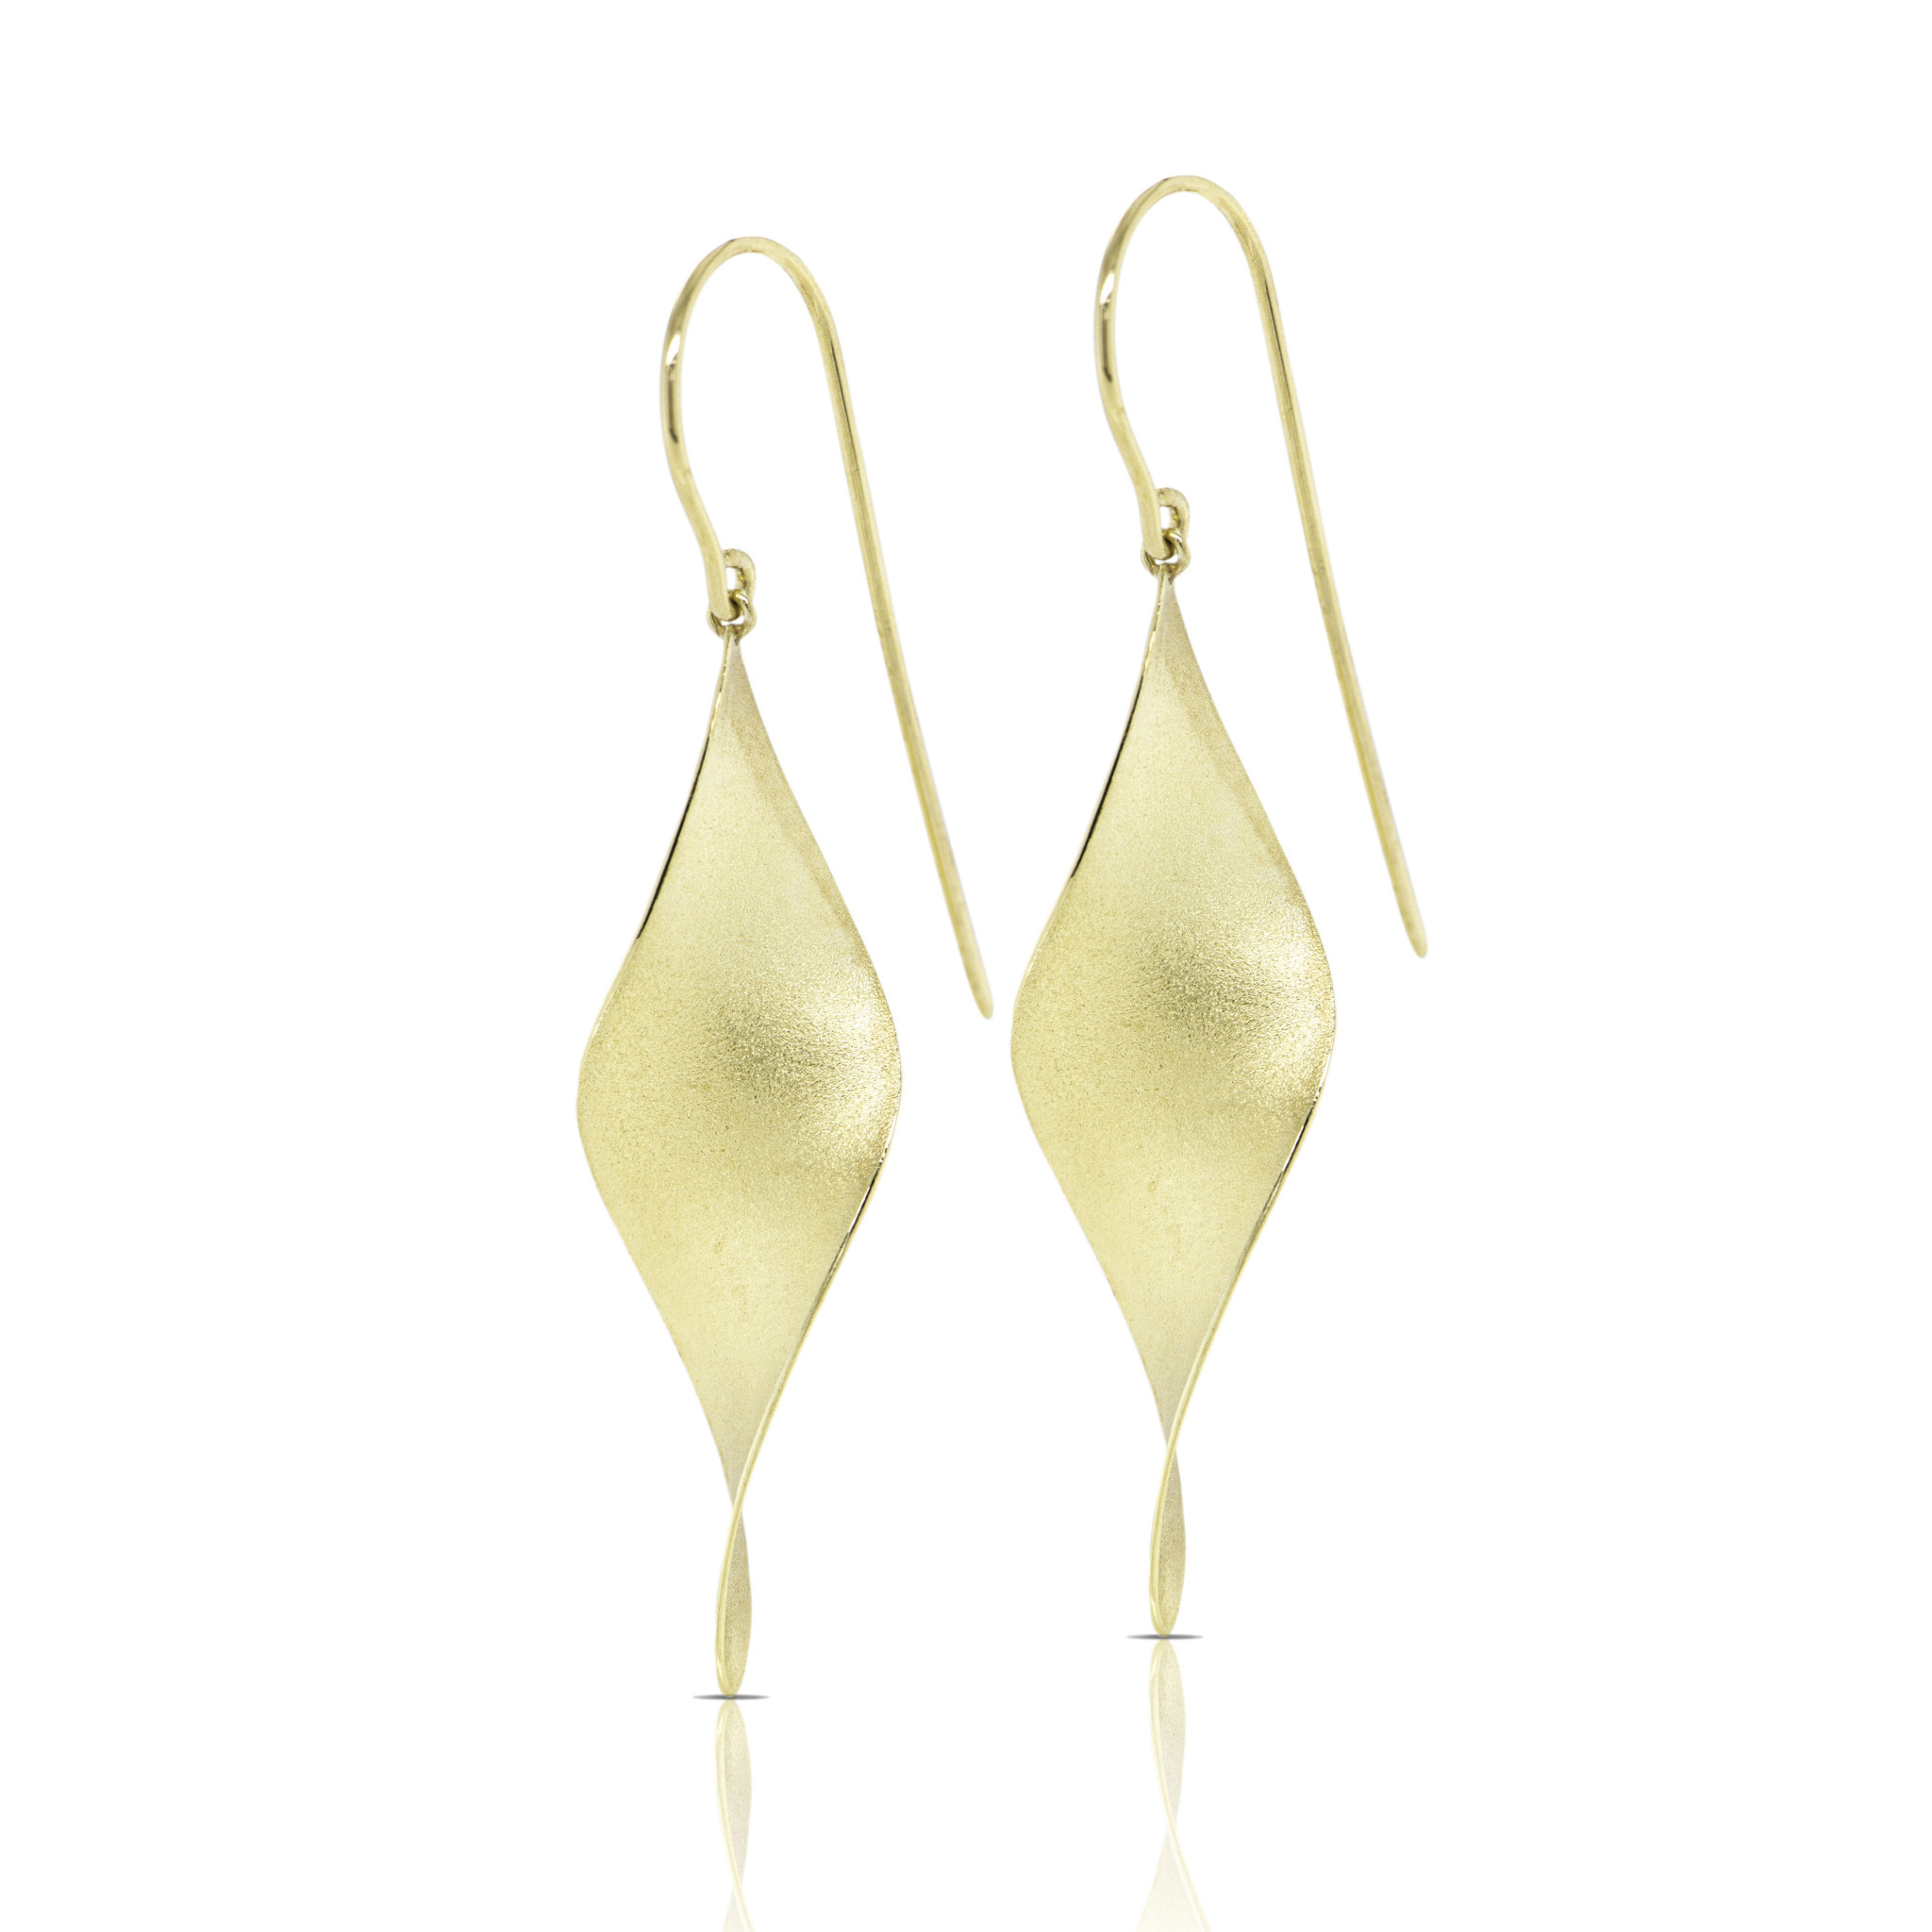 Gilia Petal Earrings, 18k yellow gold